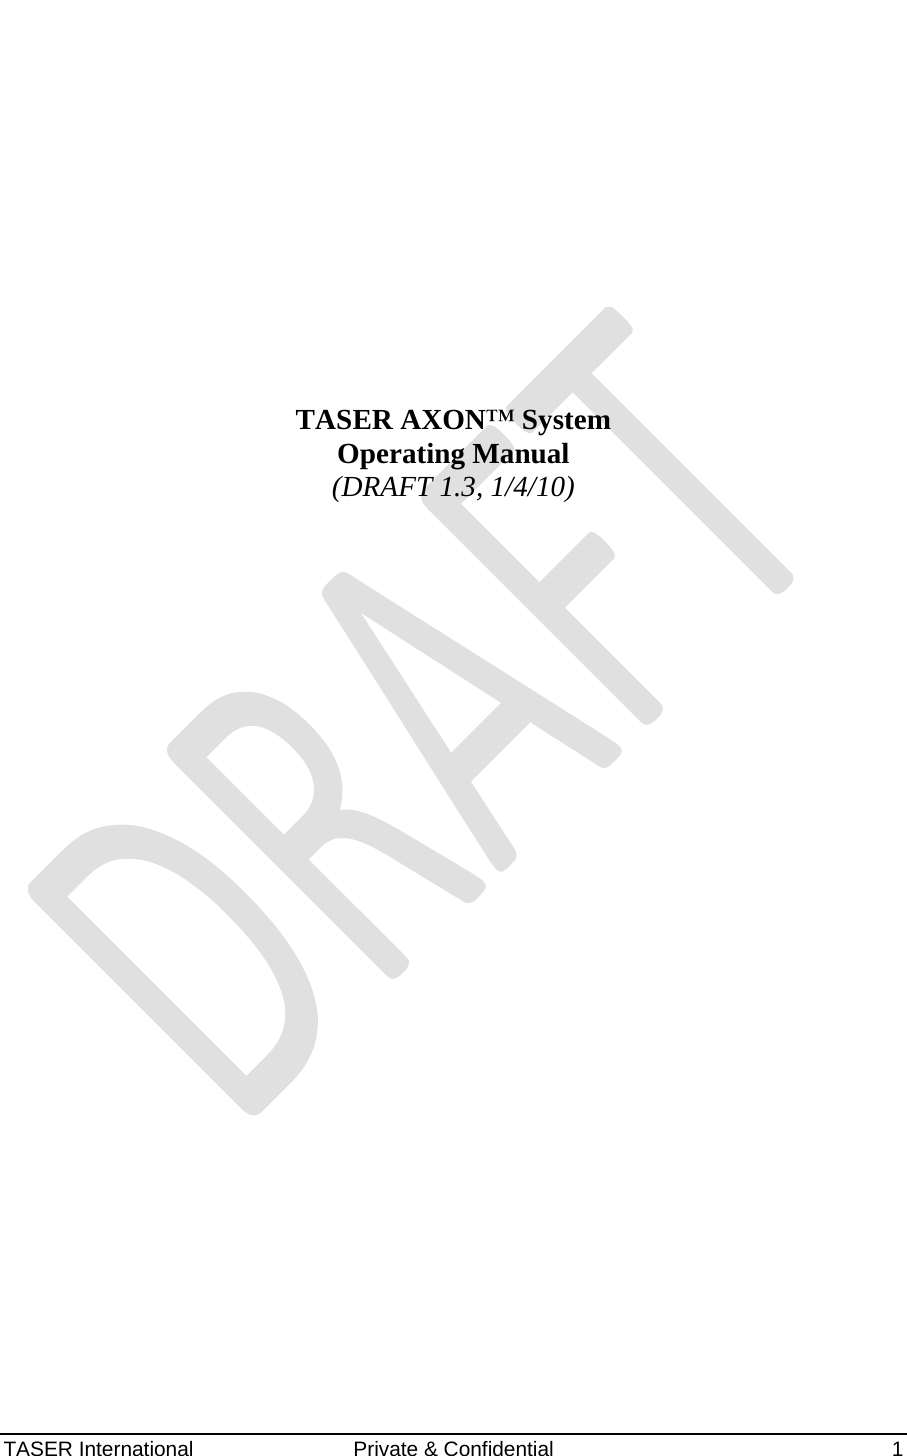 AXON™  4 Jan 2010 TASER International  Private &amp; Confidential    1            TASER AXON™ System Operating Manual (DRAFT 1.3, 1/4/10)    